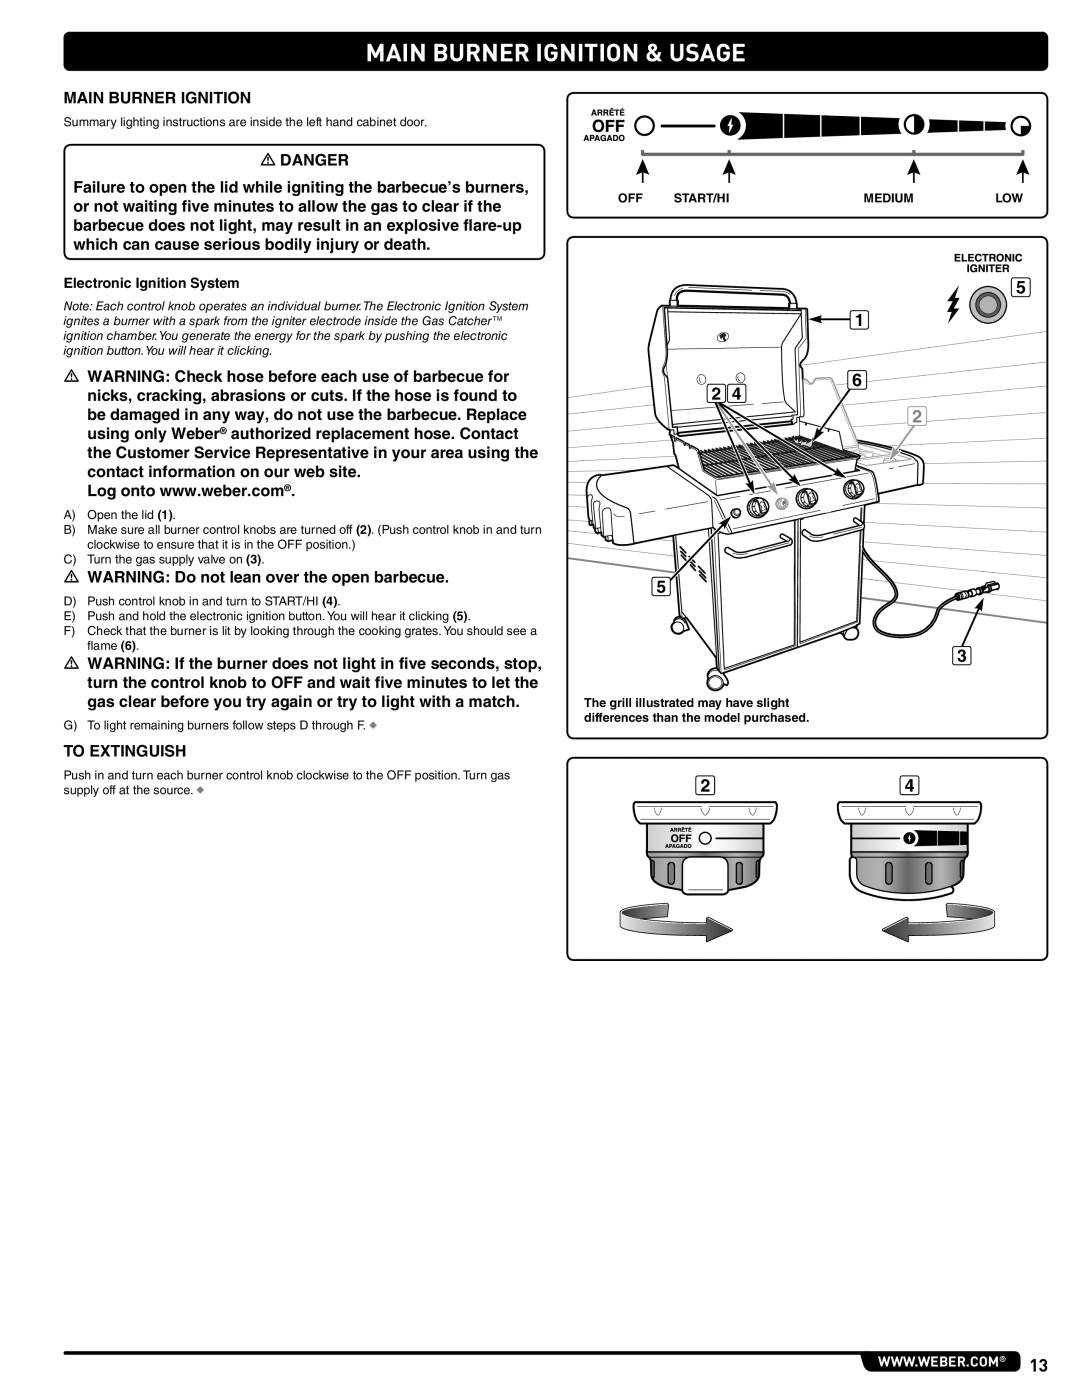 Weber 56515 manual Main Burner Ignition & Usage, Electronic Ignition System 